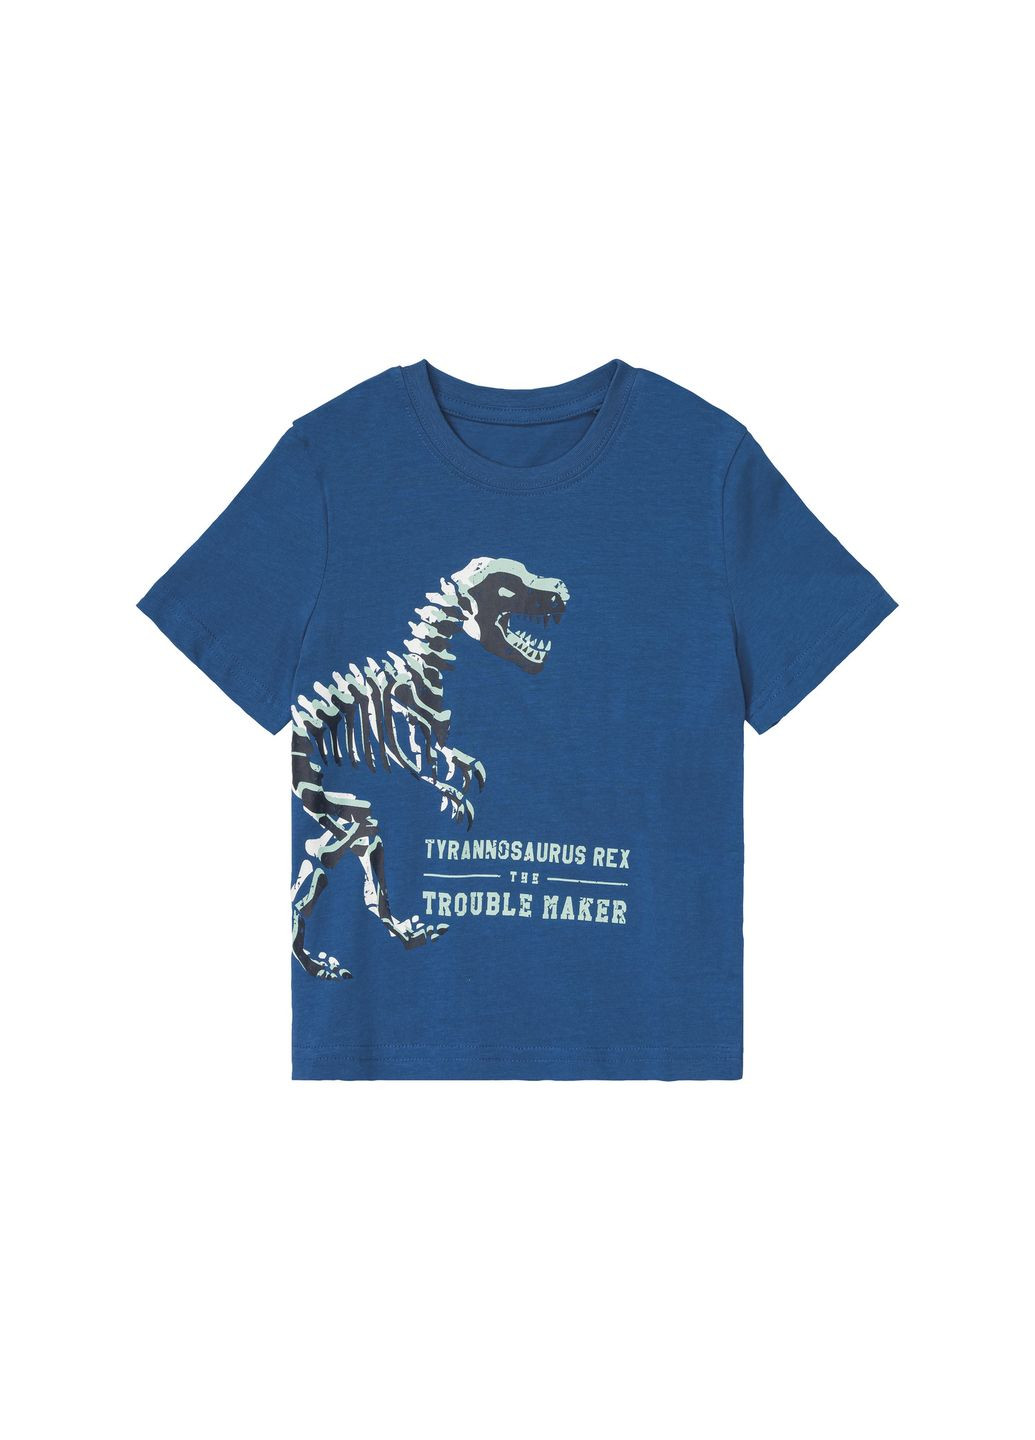 Синяя демисезонная футболка набор 2 шт. для мальчика 403695-н Lupilu Футболка 403695-н синій